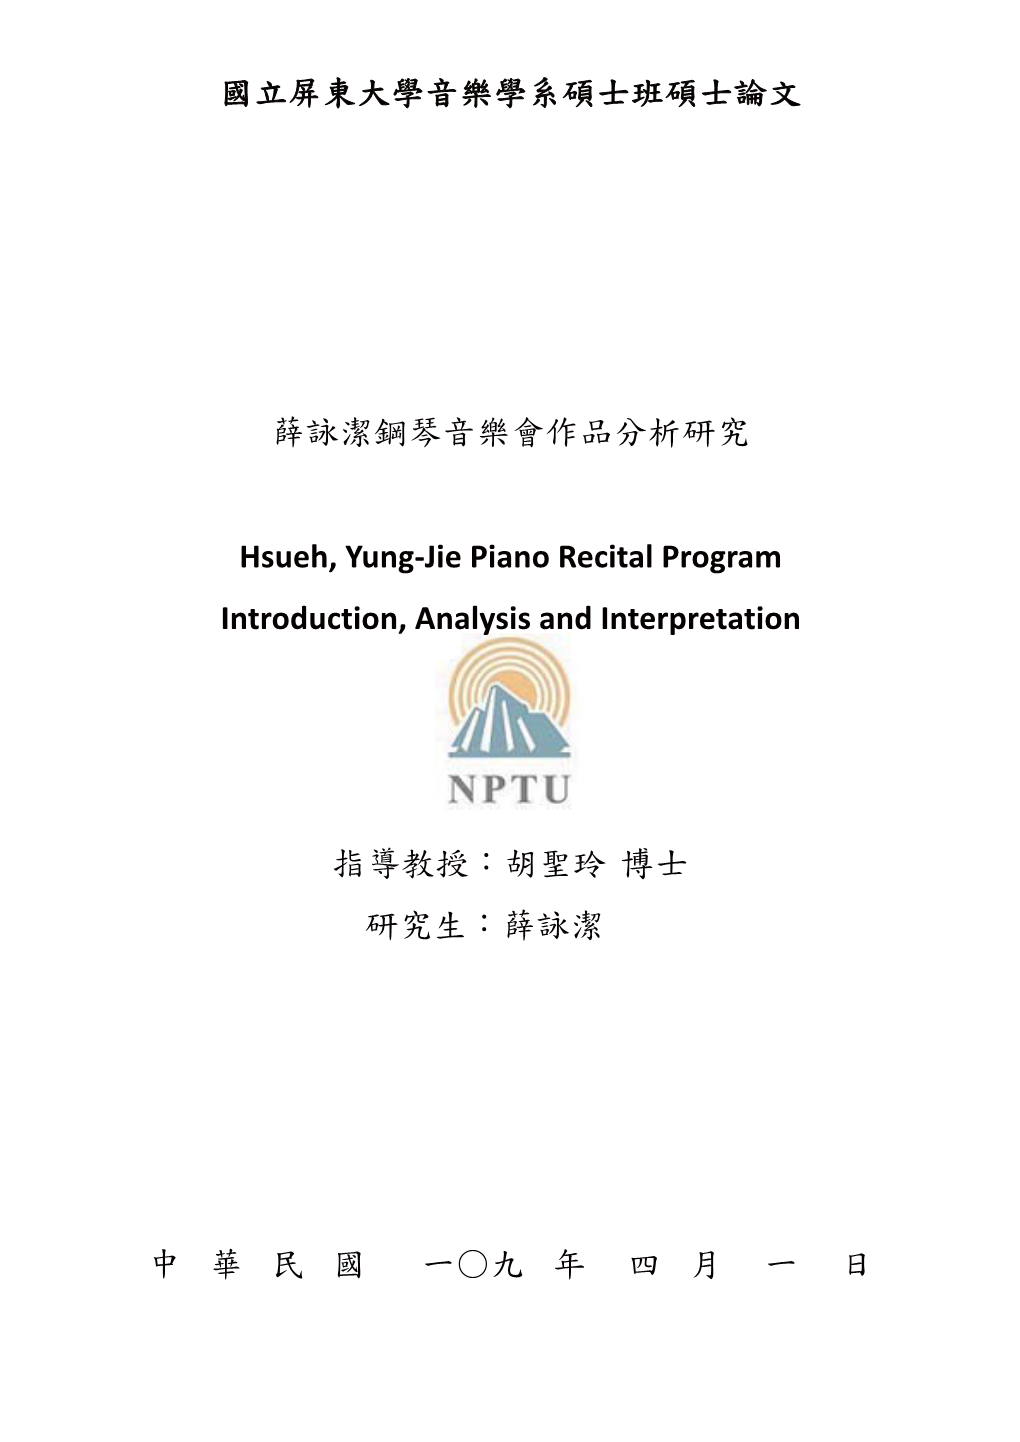 & & -#(,! Hsueh, Yung-Jie Piano Recital Program Introduction